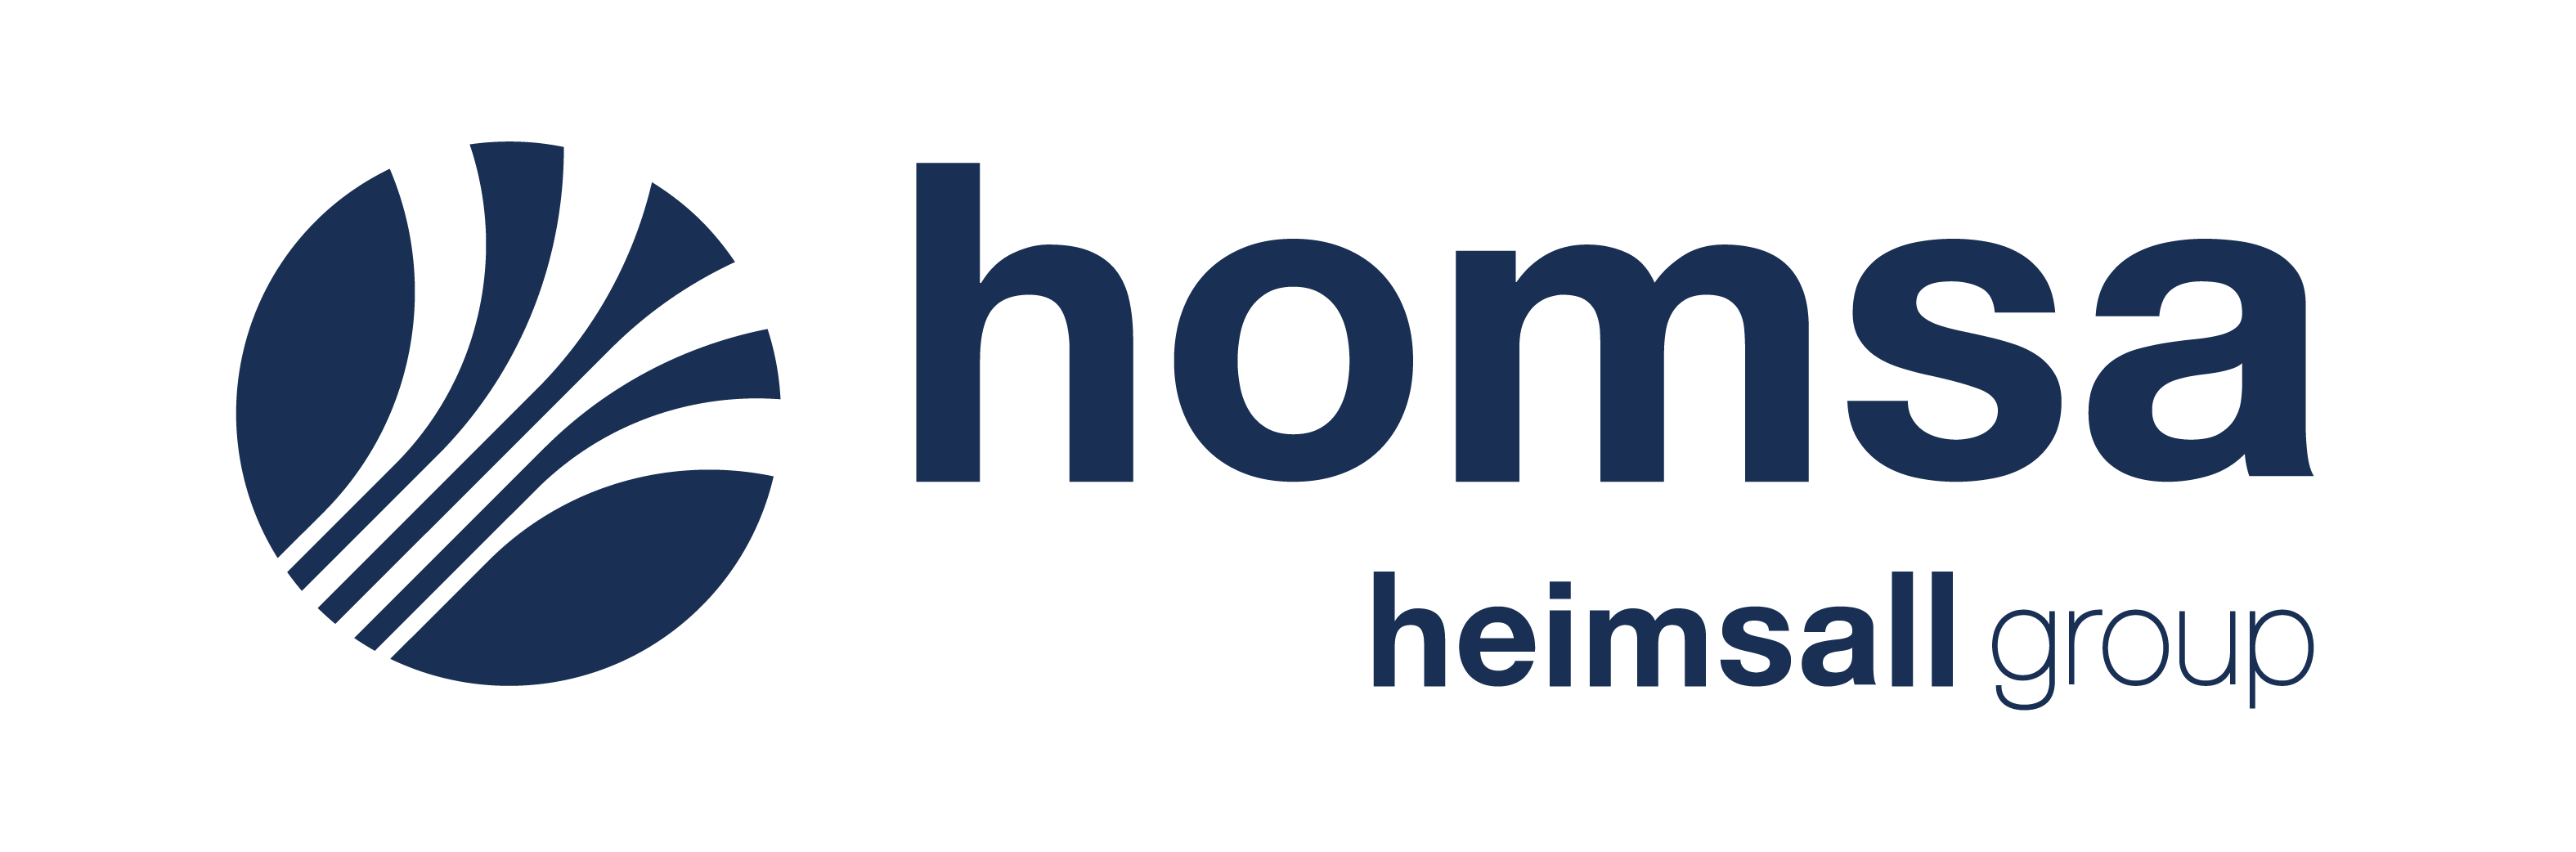 Logotipo de Homsa que pertenece al grupo Heimsall